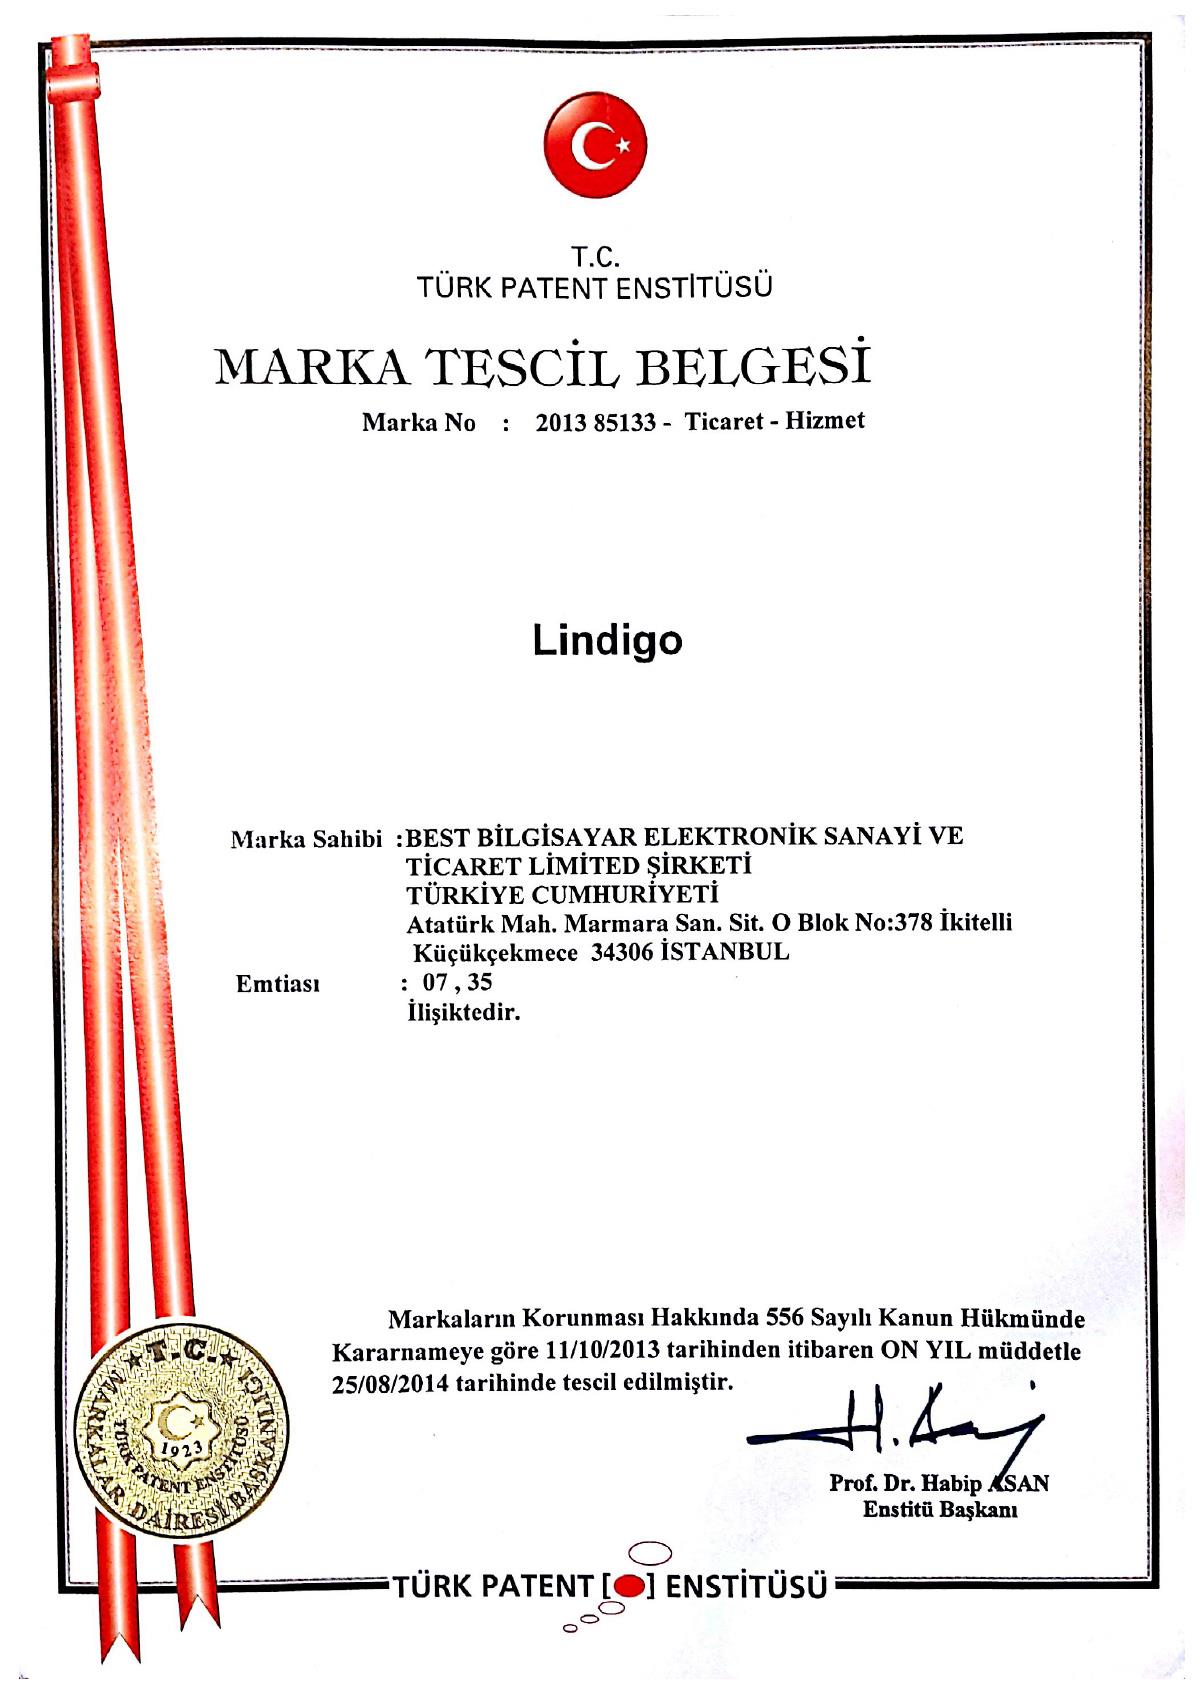 Trademark Registration
Certificate